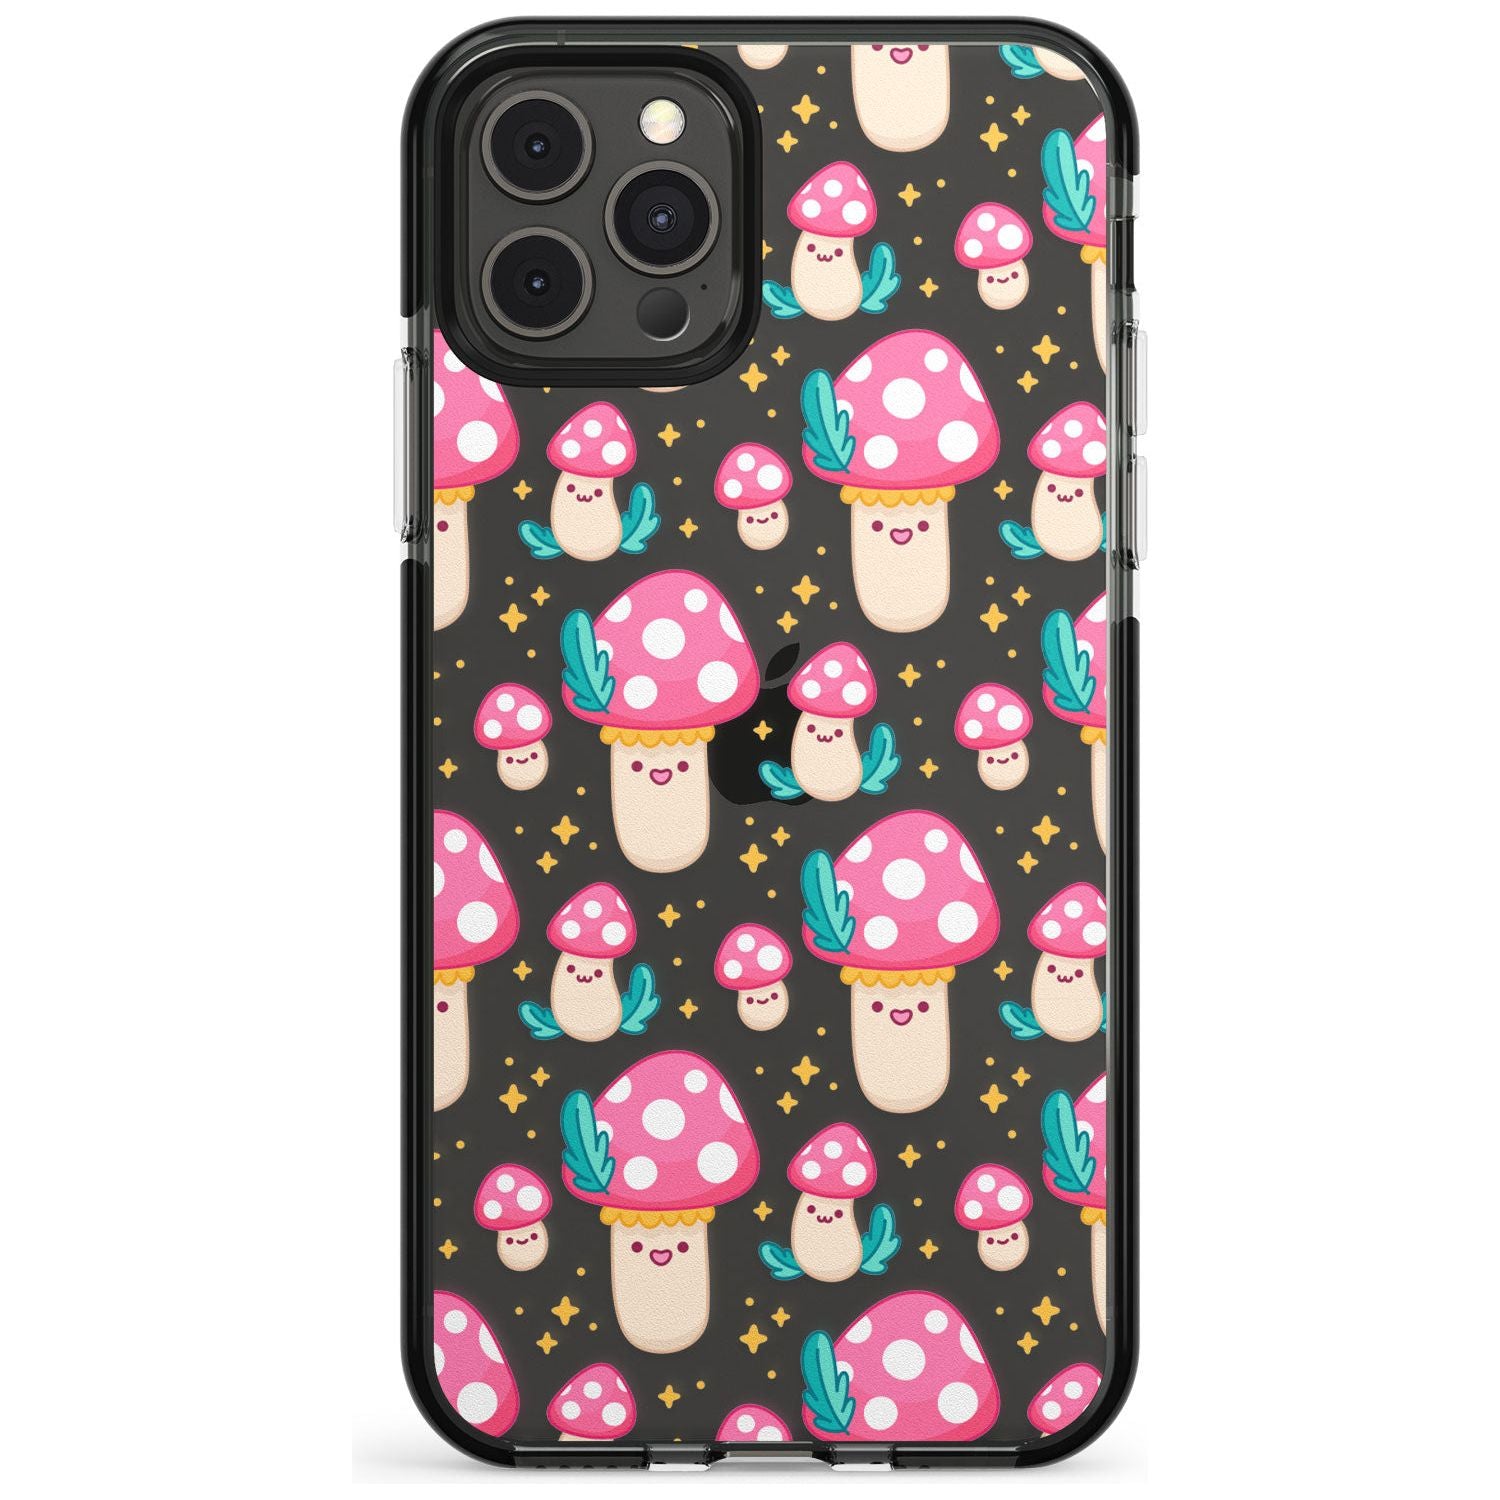 Cute Mushrooms Pattern Black Impact Phone Case for iPhone 11